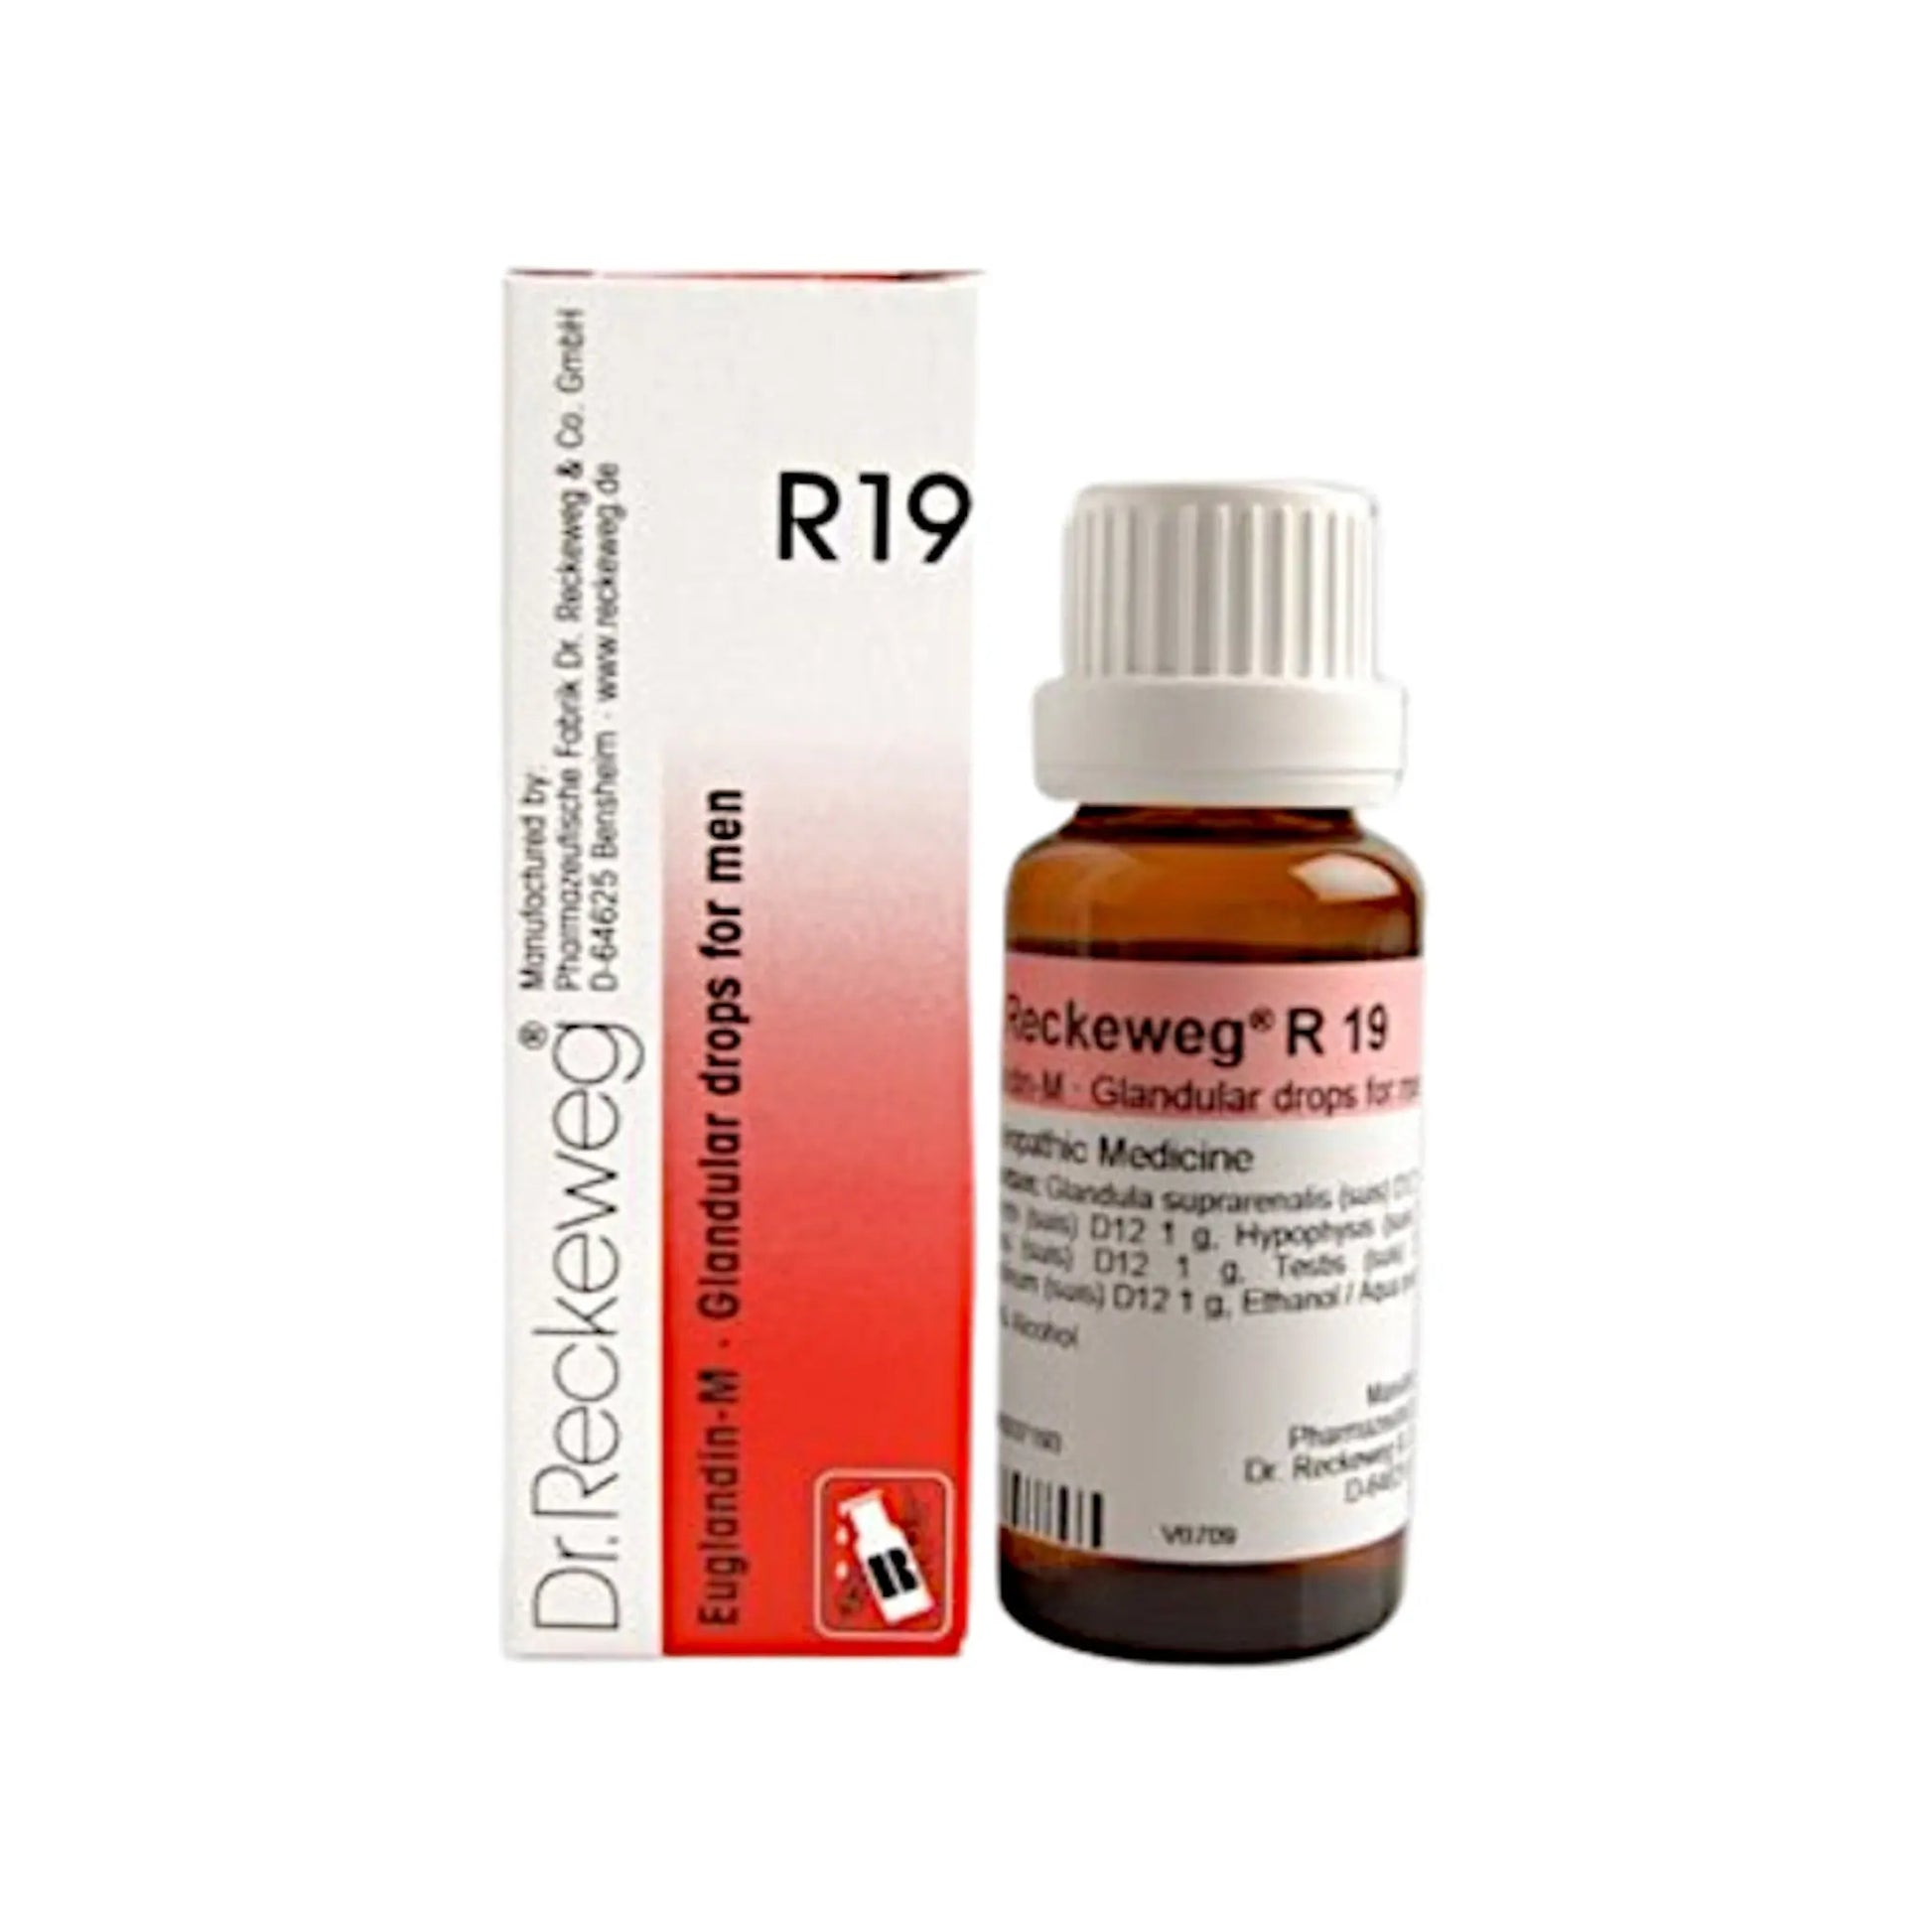 Dr. Reckeweg R19 - Euglandin M Glandular Drops for Men 22 ml - my-ayurvedic